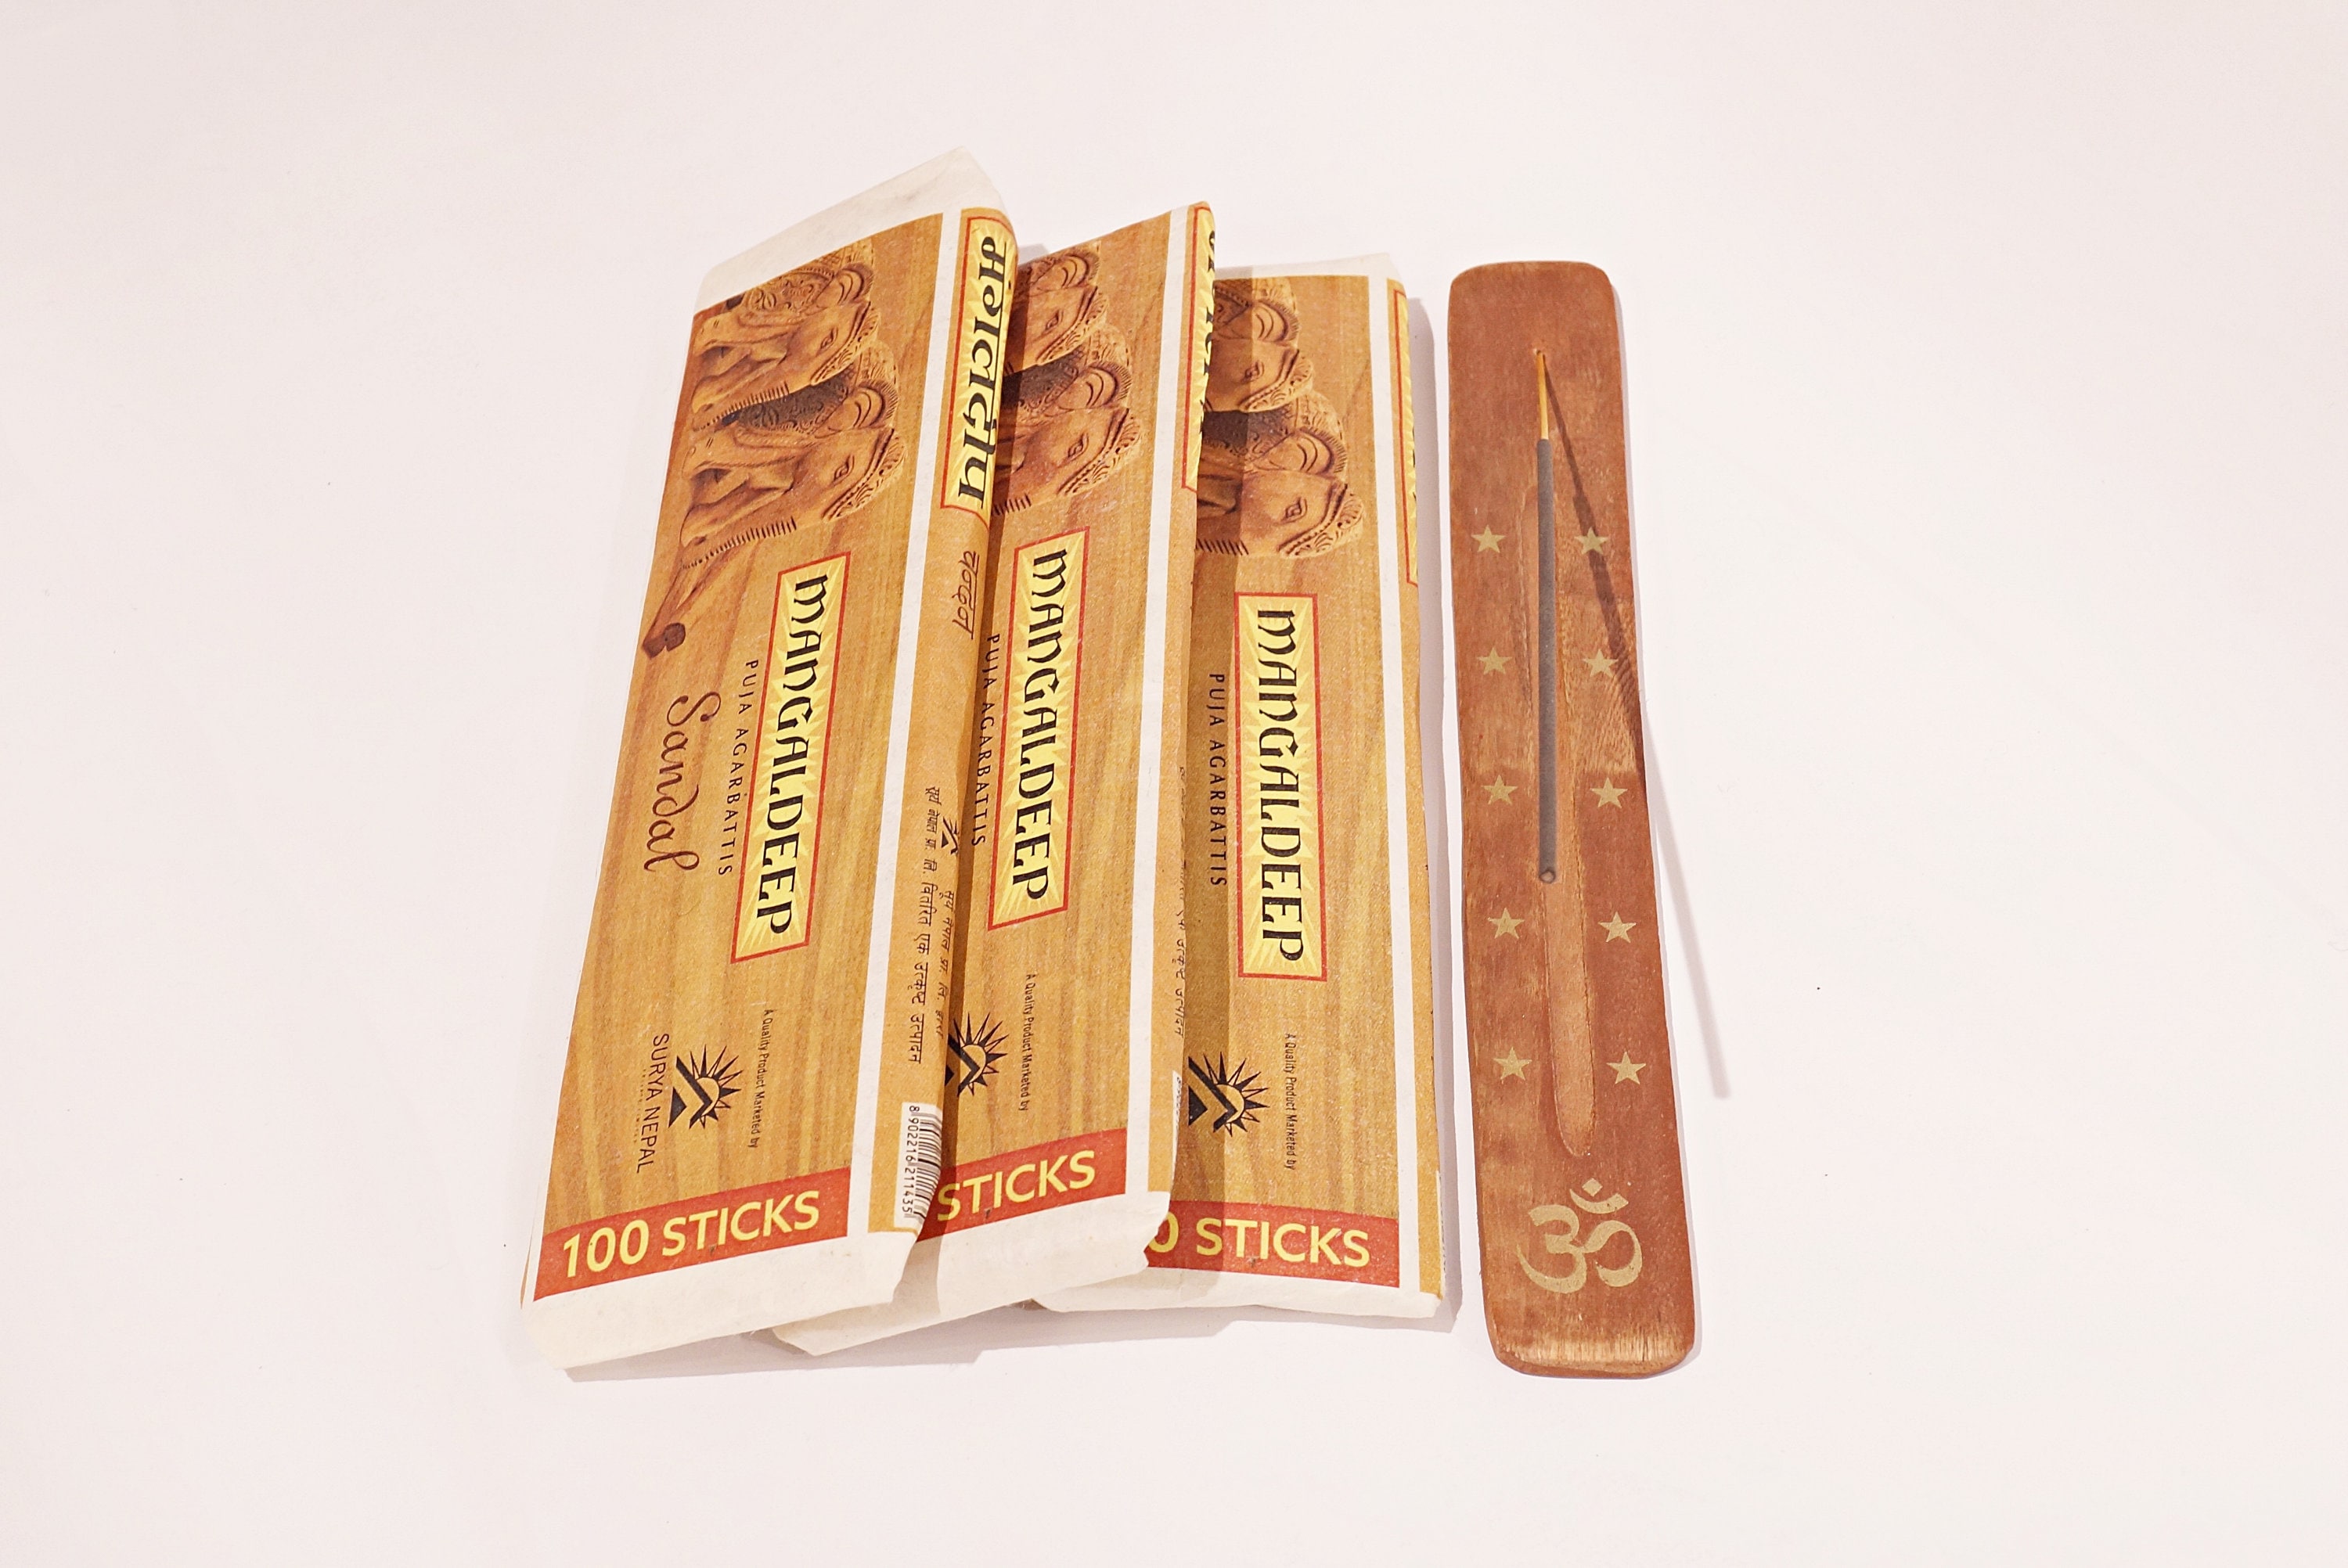 Mangaldeep 3 in 1 Incense Sticks / Agarbatti Price - Buy Online at ₹56 in  India